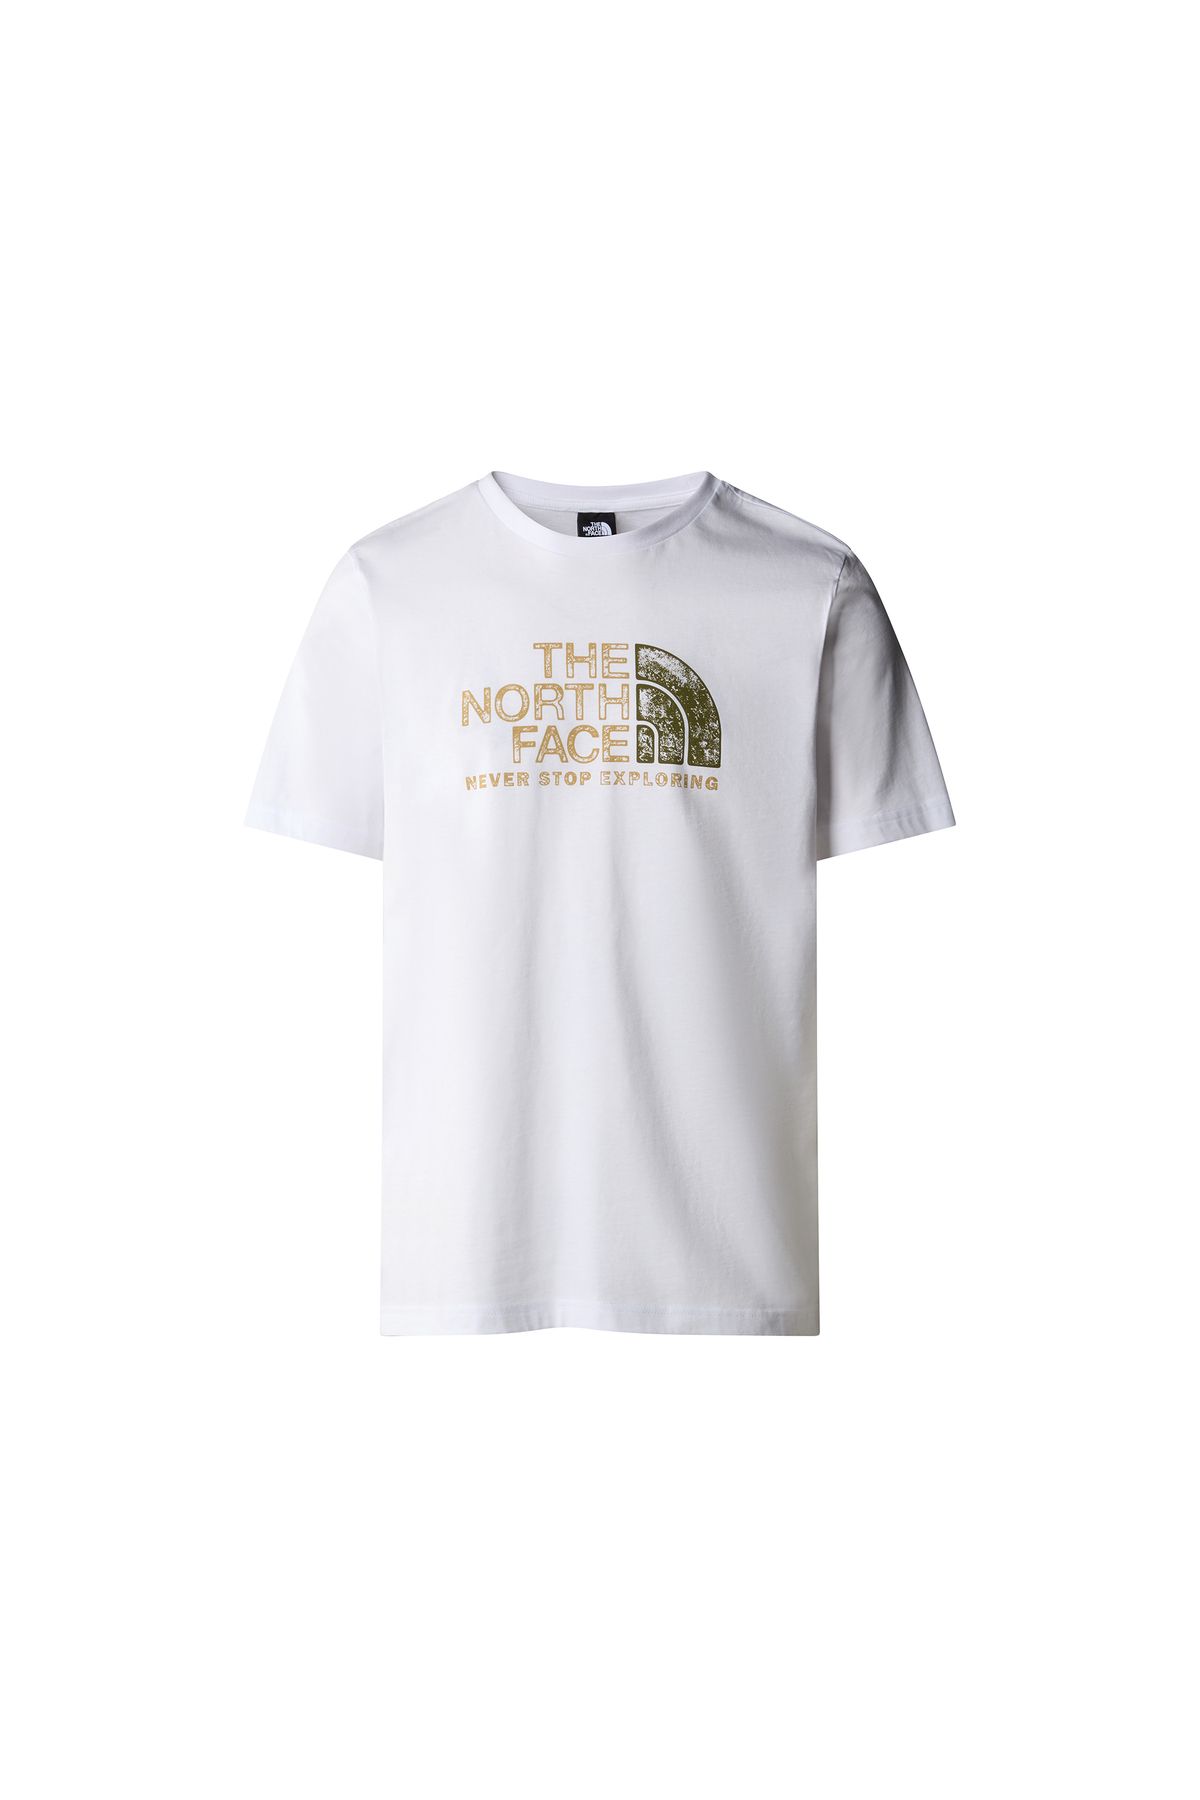 The North Face M S/S Rust 2 Tee Tişört Erkek Günlük T-shirt